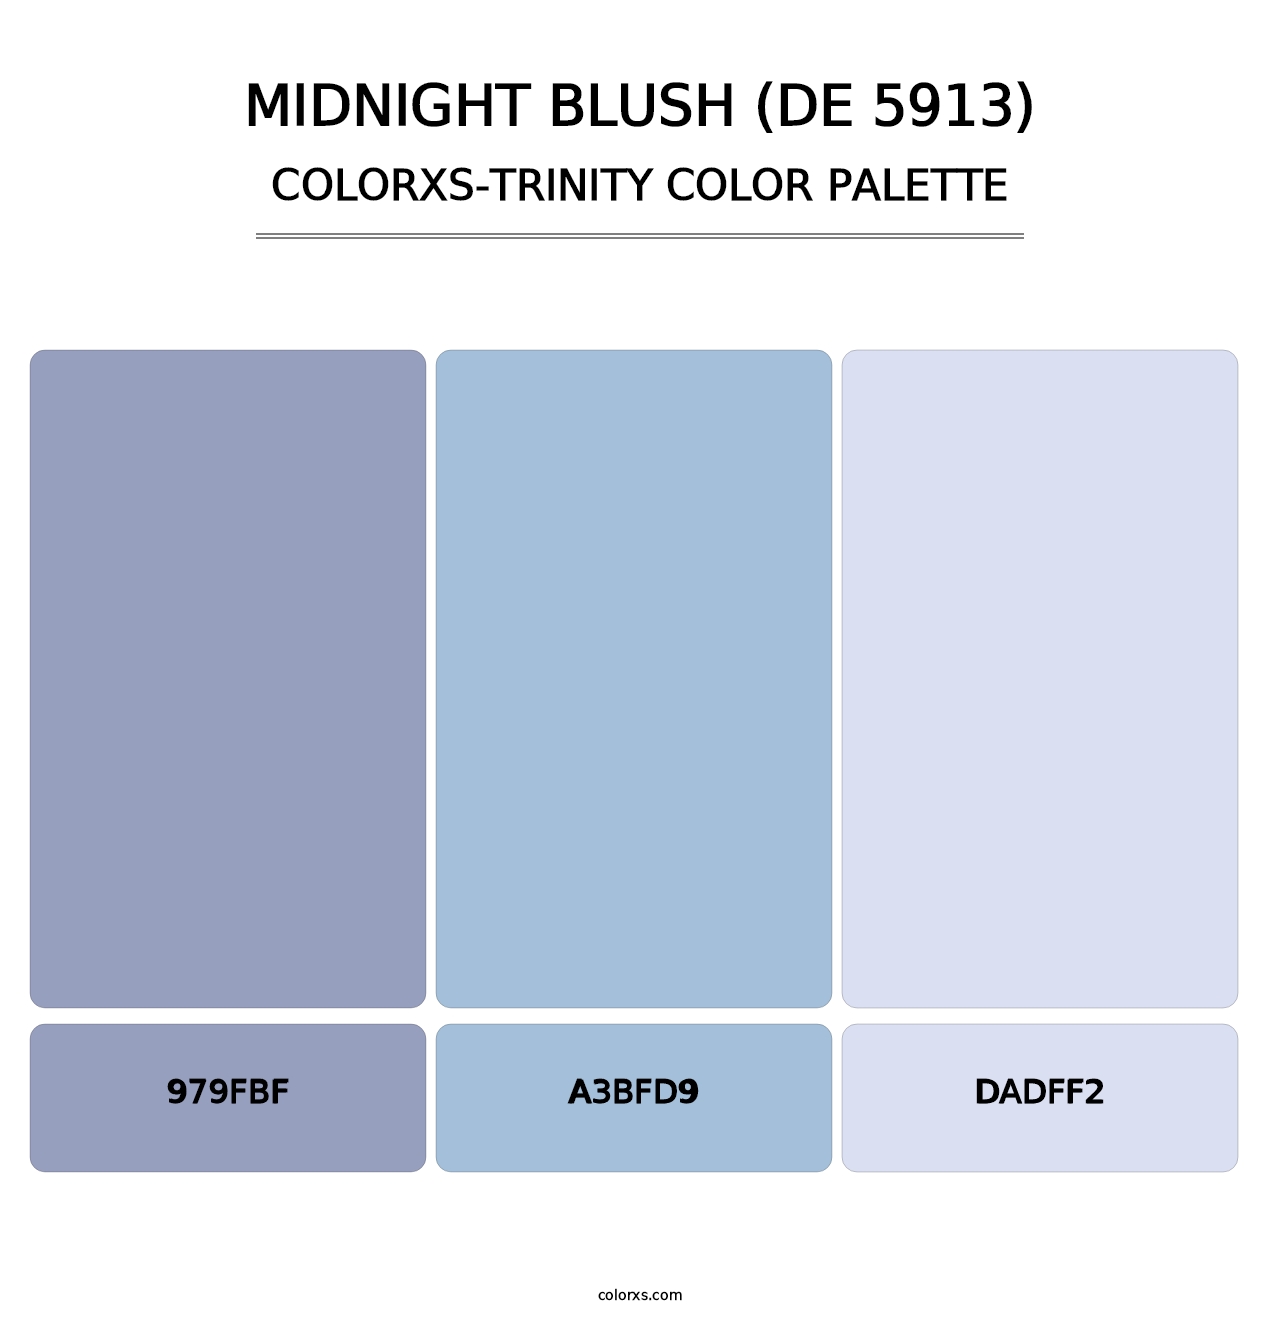 Midnight Blush (DE 5913) - Colorxs Trinity Palette